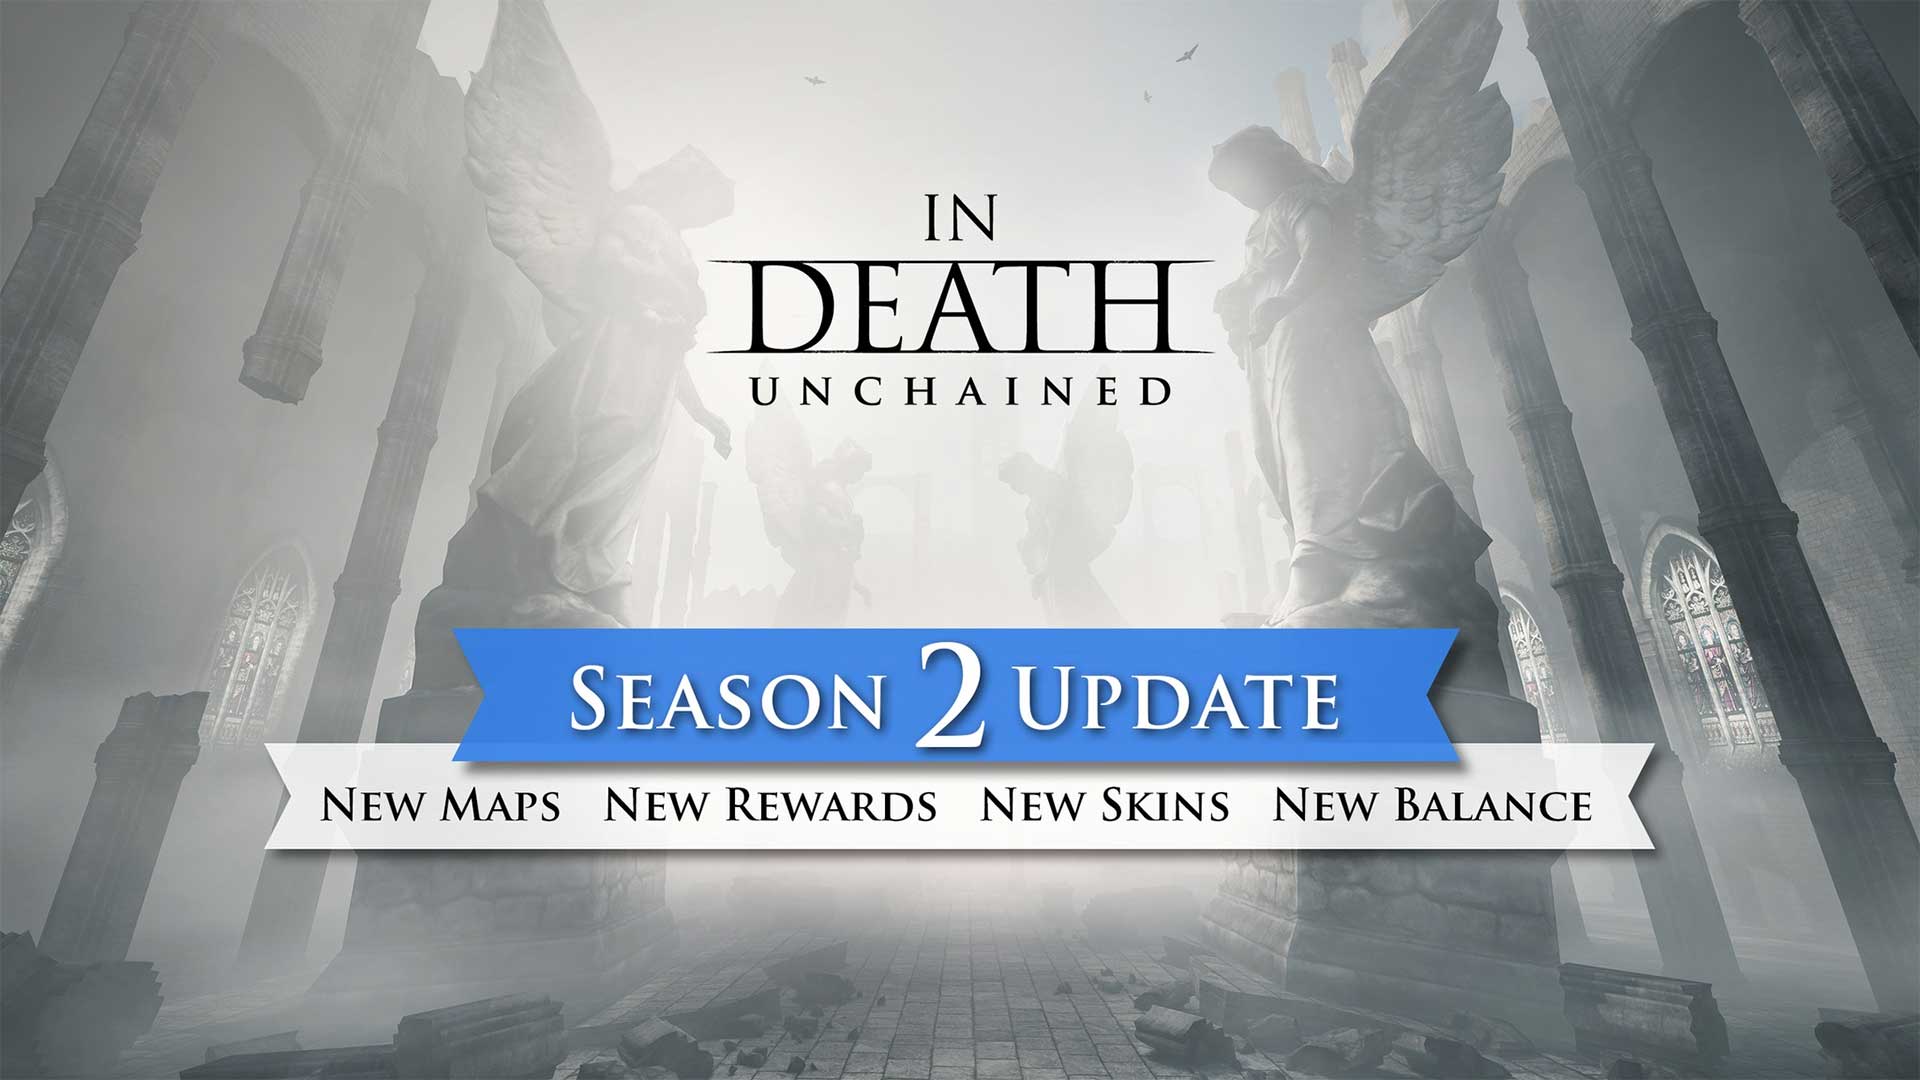 in death unchained season 2 update